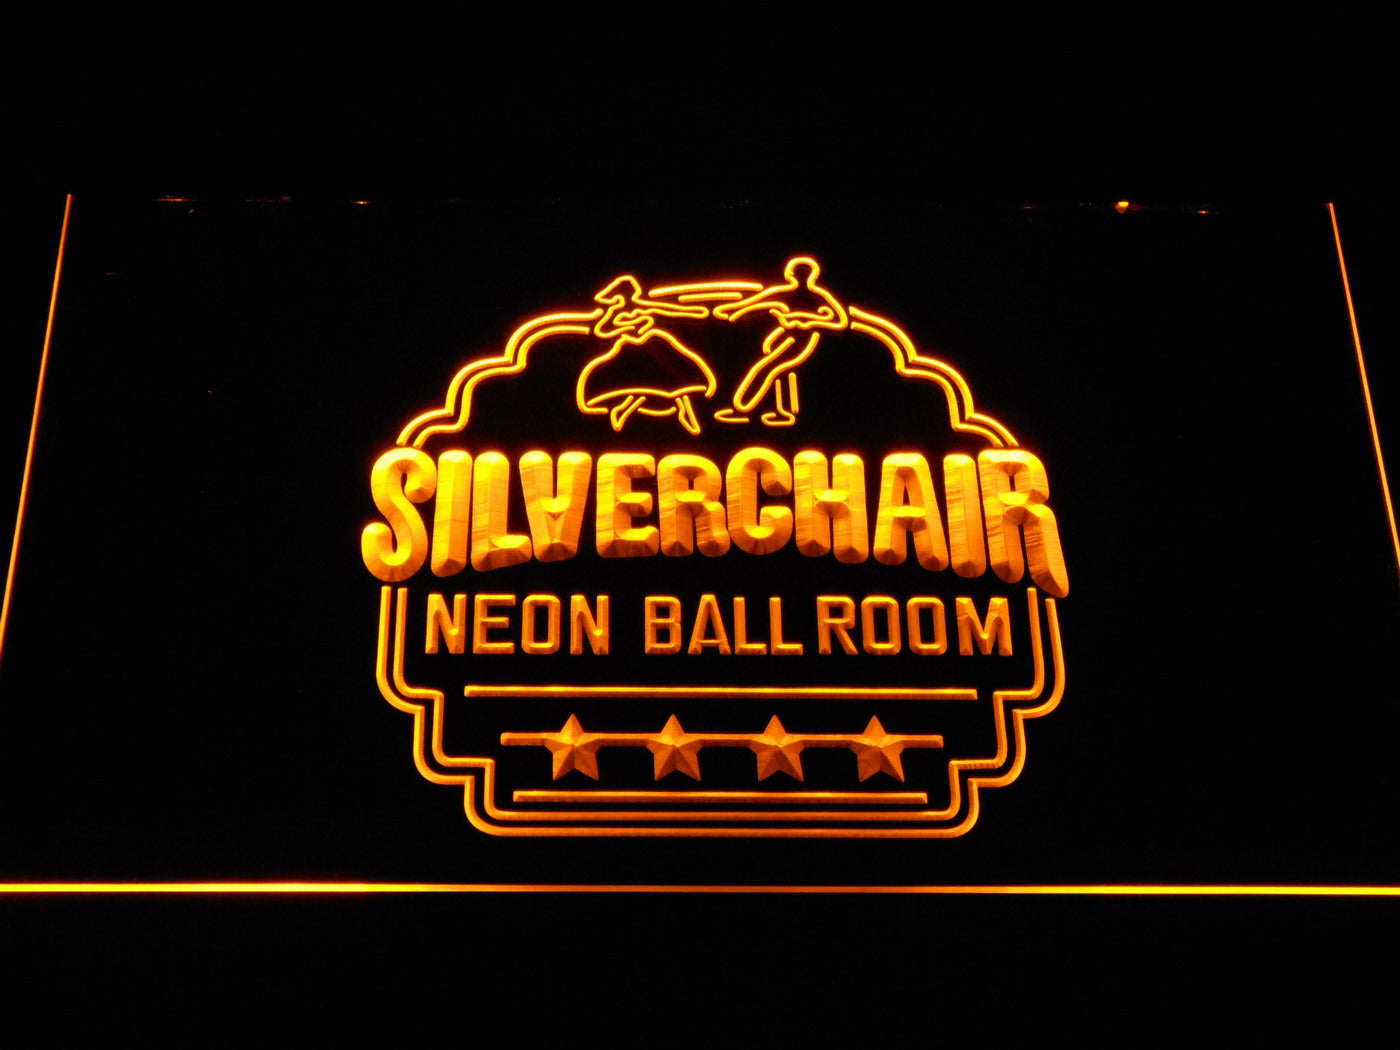 Silverchair Neon Ballroom LED Neon Sign